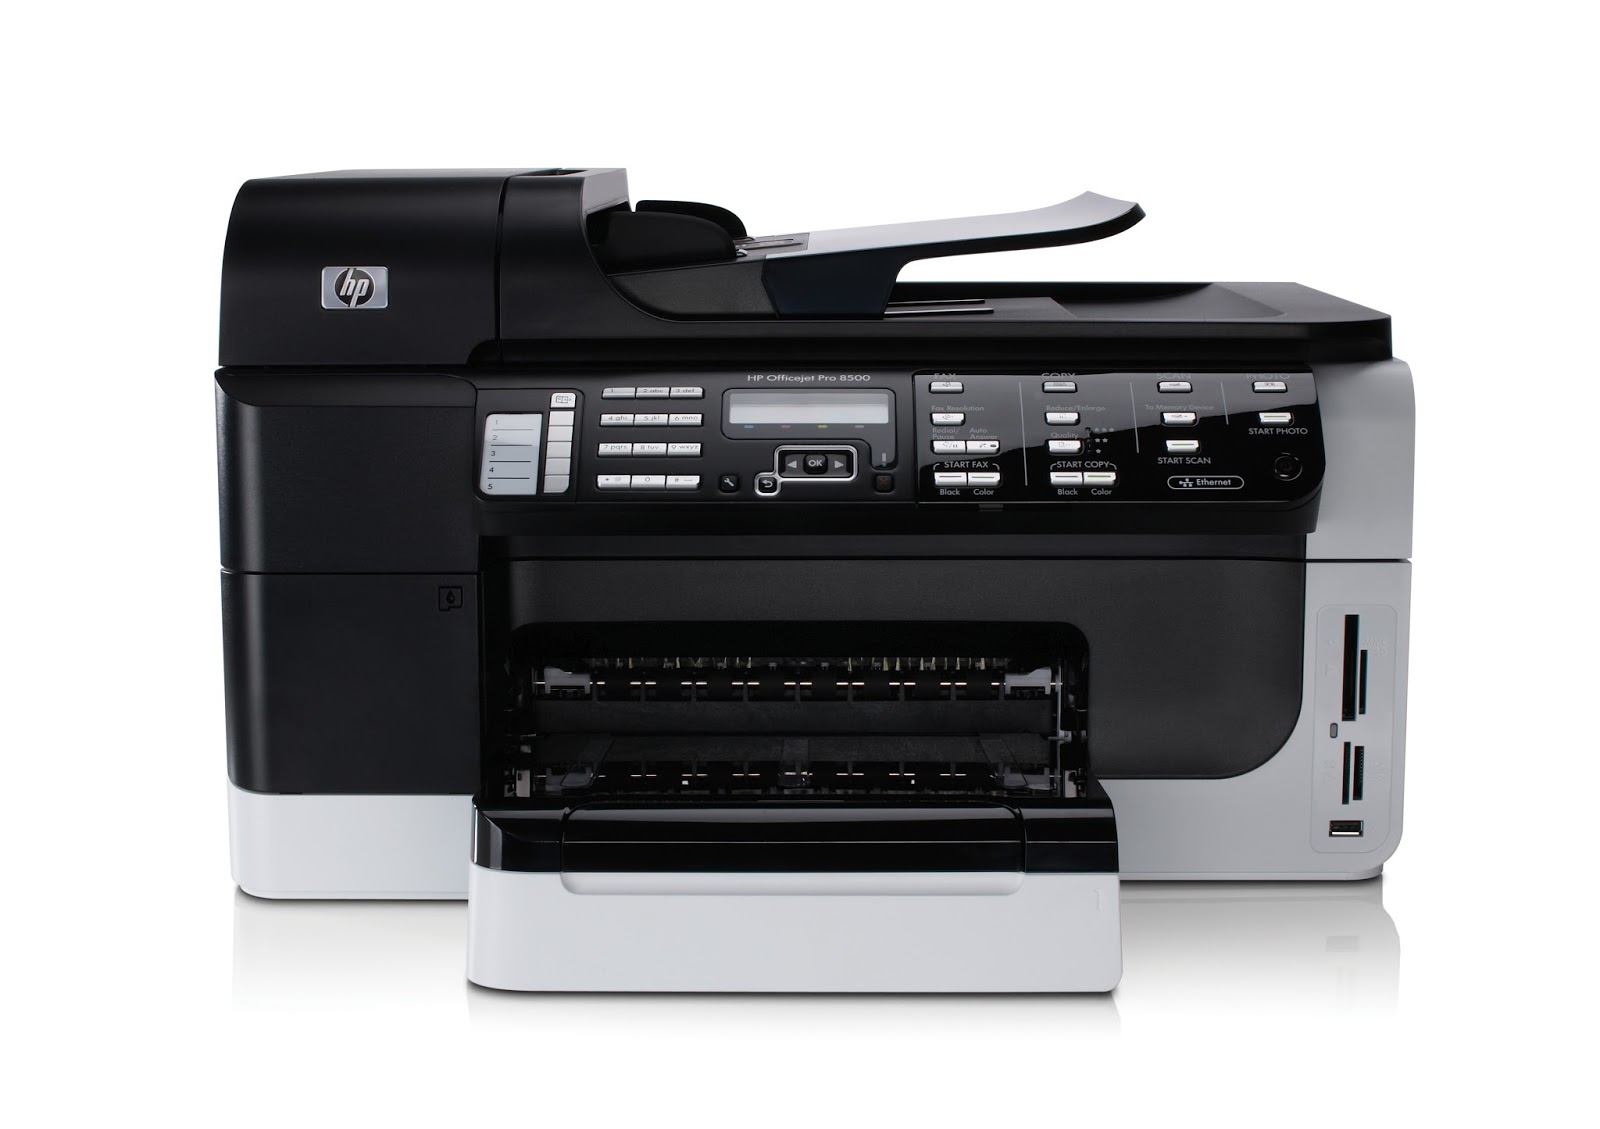 Hp laserjet 1020 printer driver for mac high sierra os